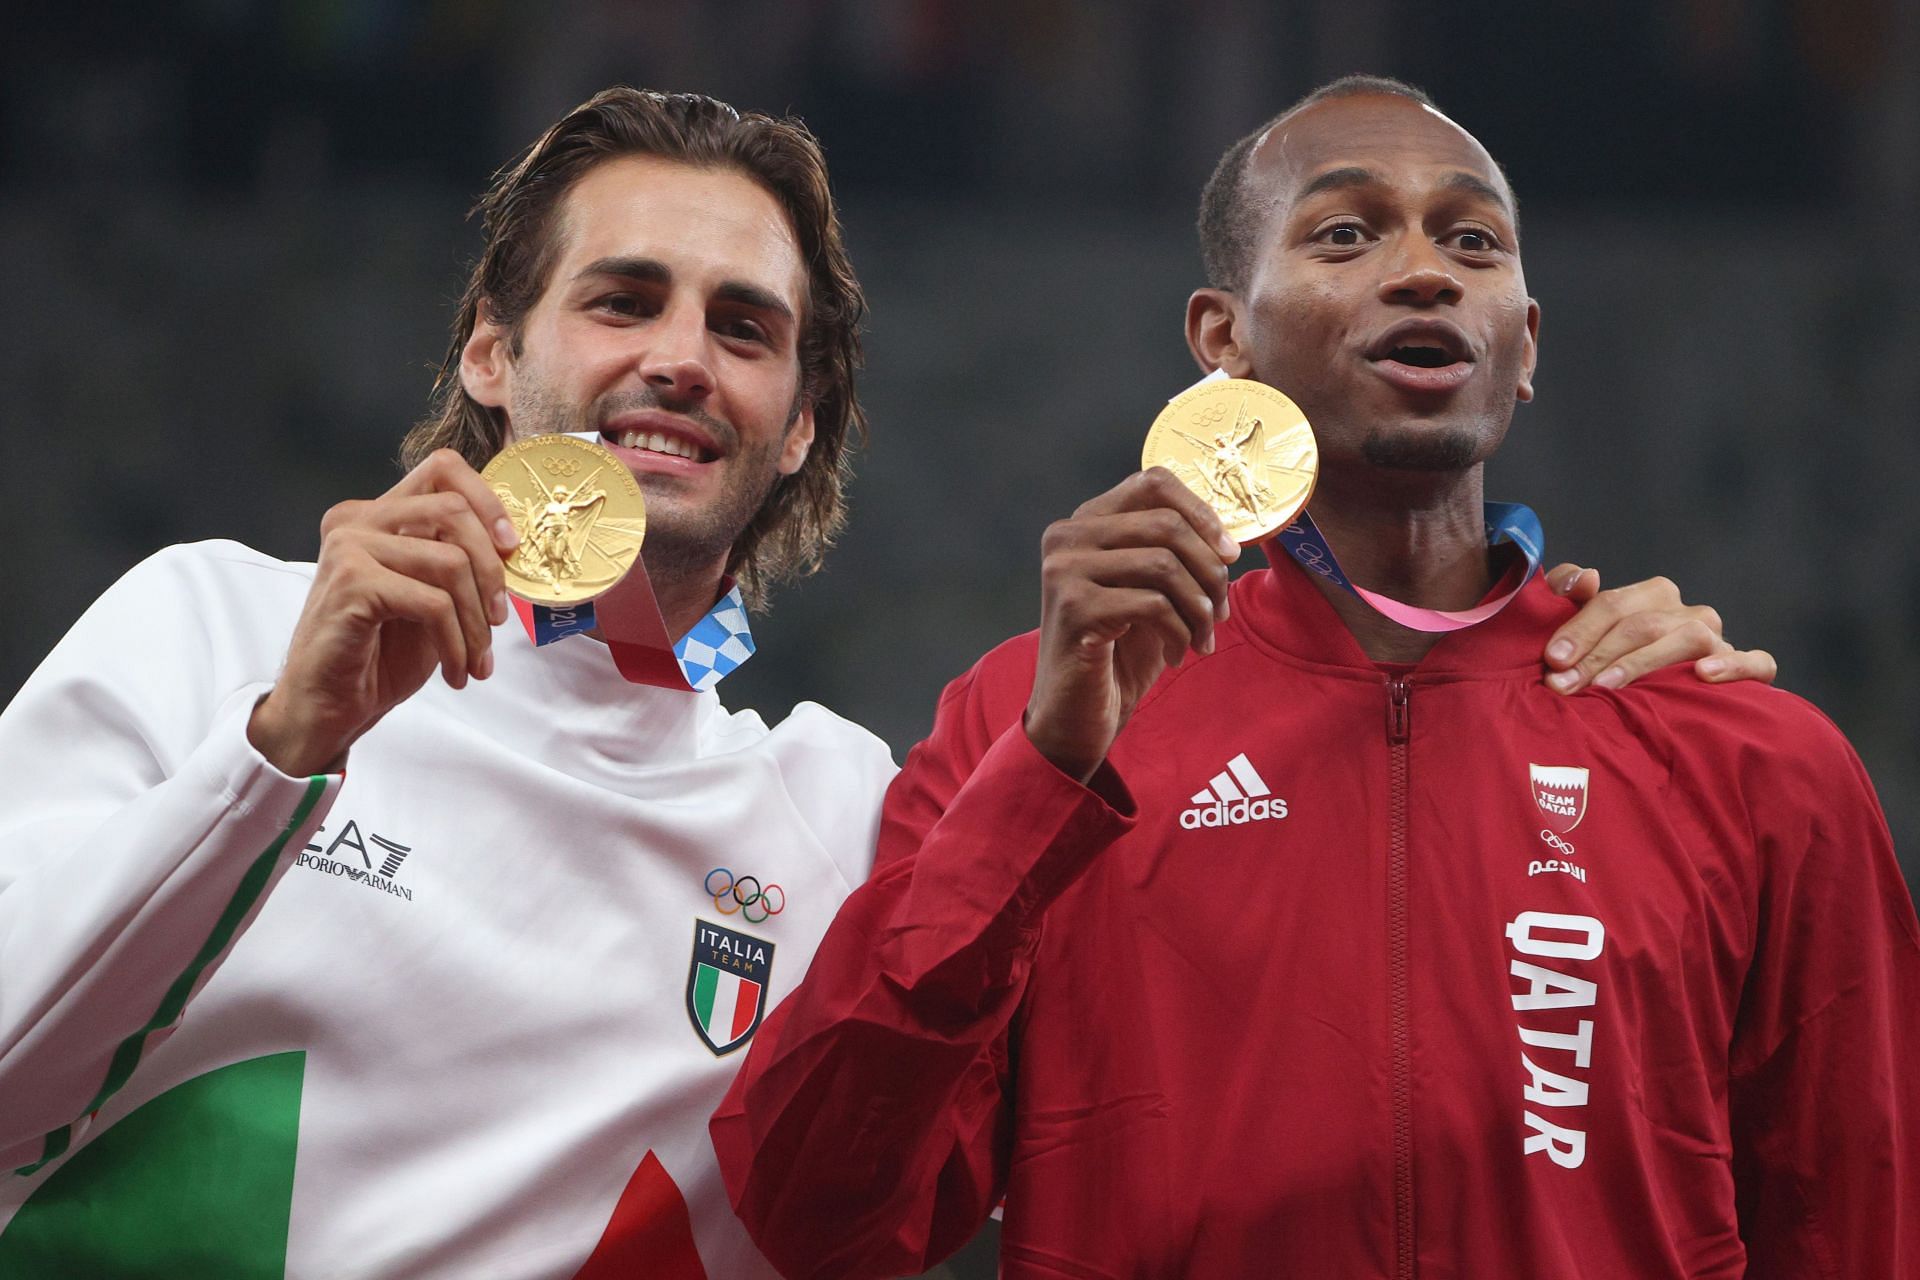 Gianmarco Tamberi and Qatar&rsquo;s Mutaz Essa Barshim sharing gold medals in Tokyo Olympics 2021